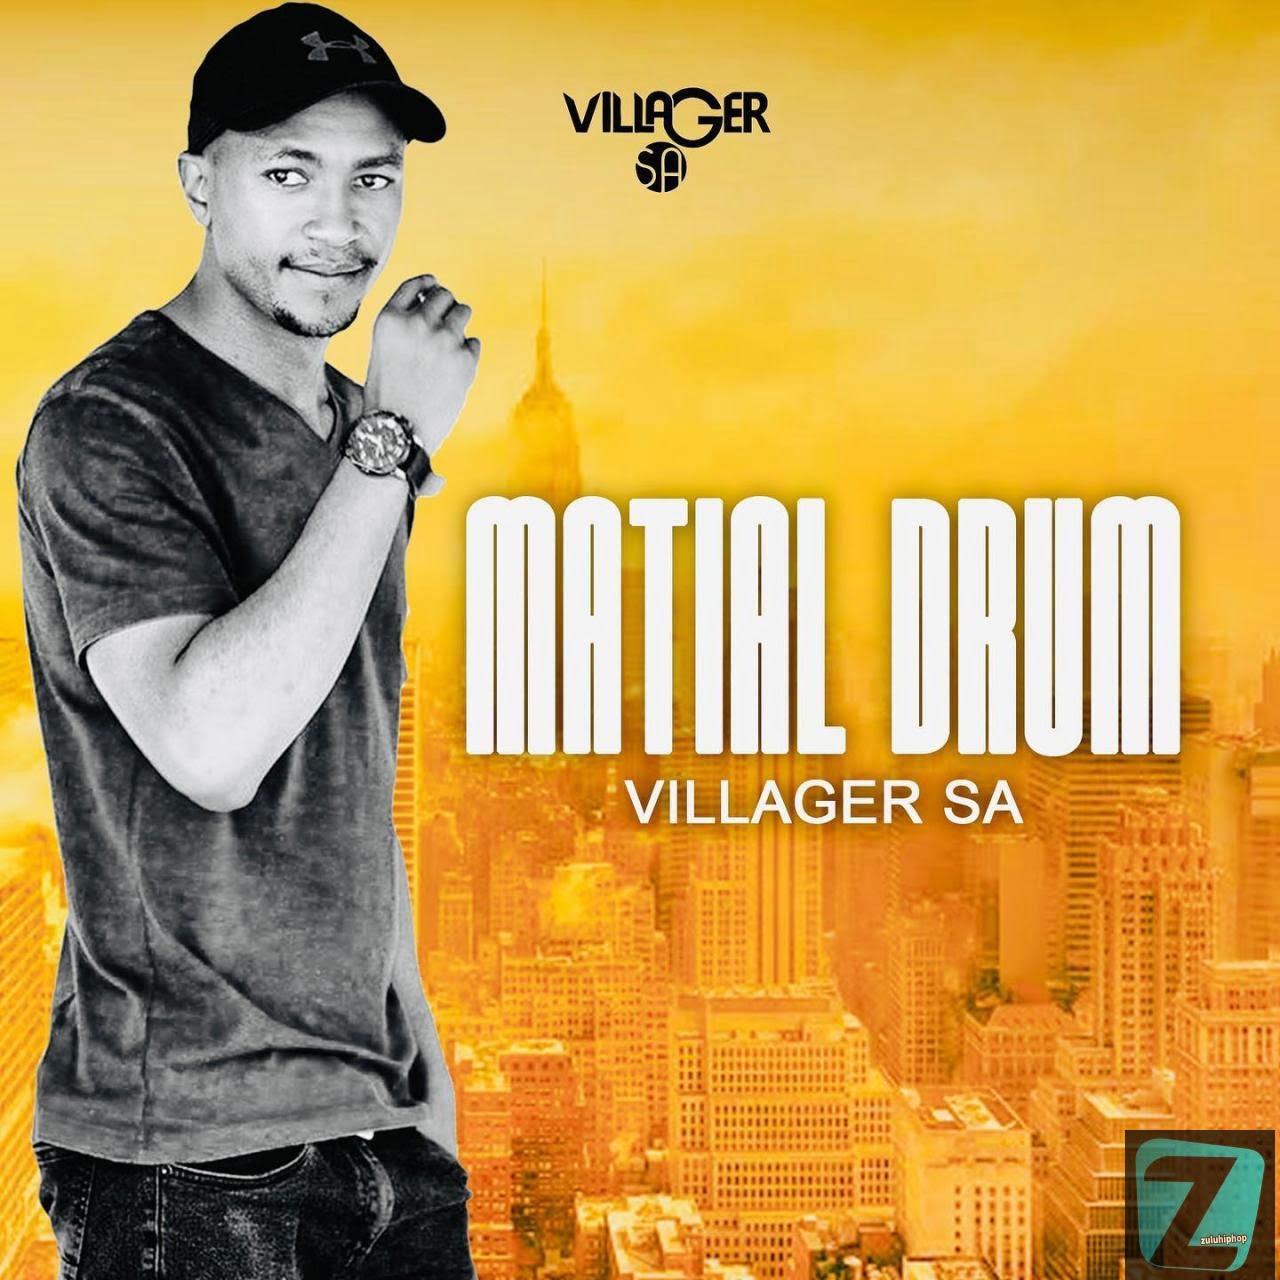 Villager SA – Martial Drum